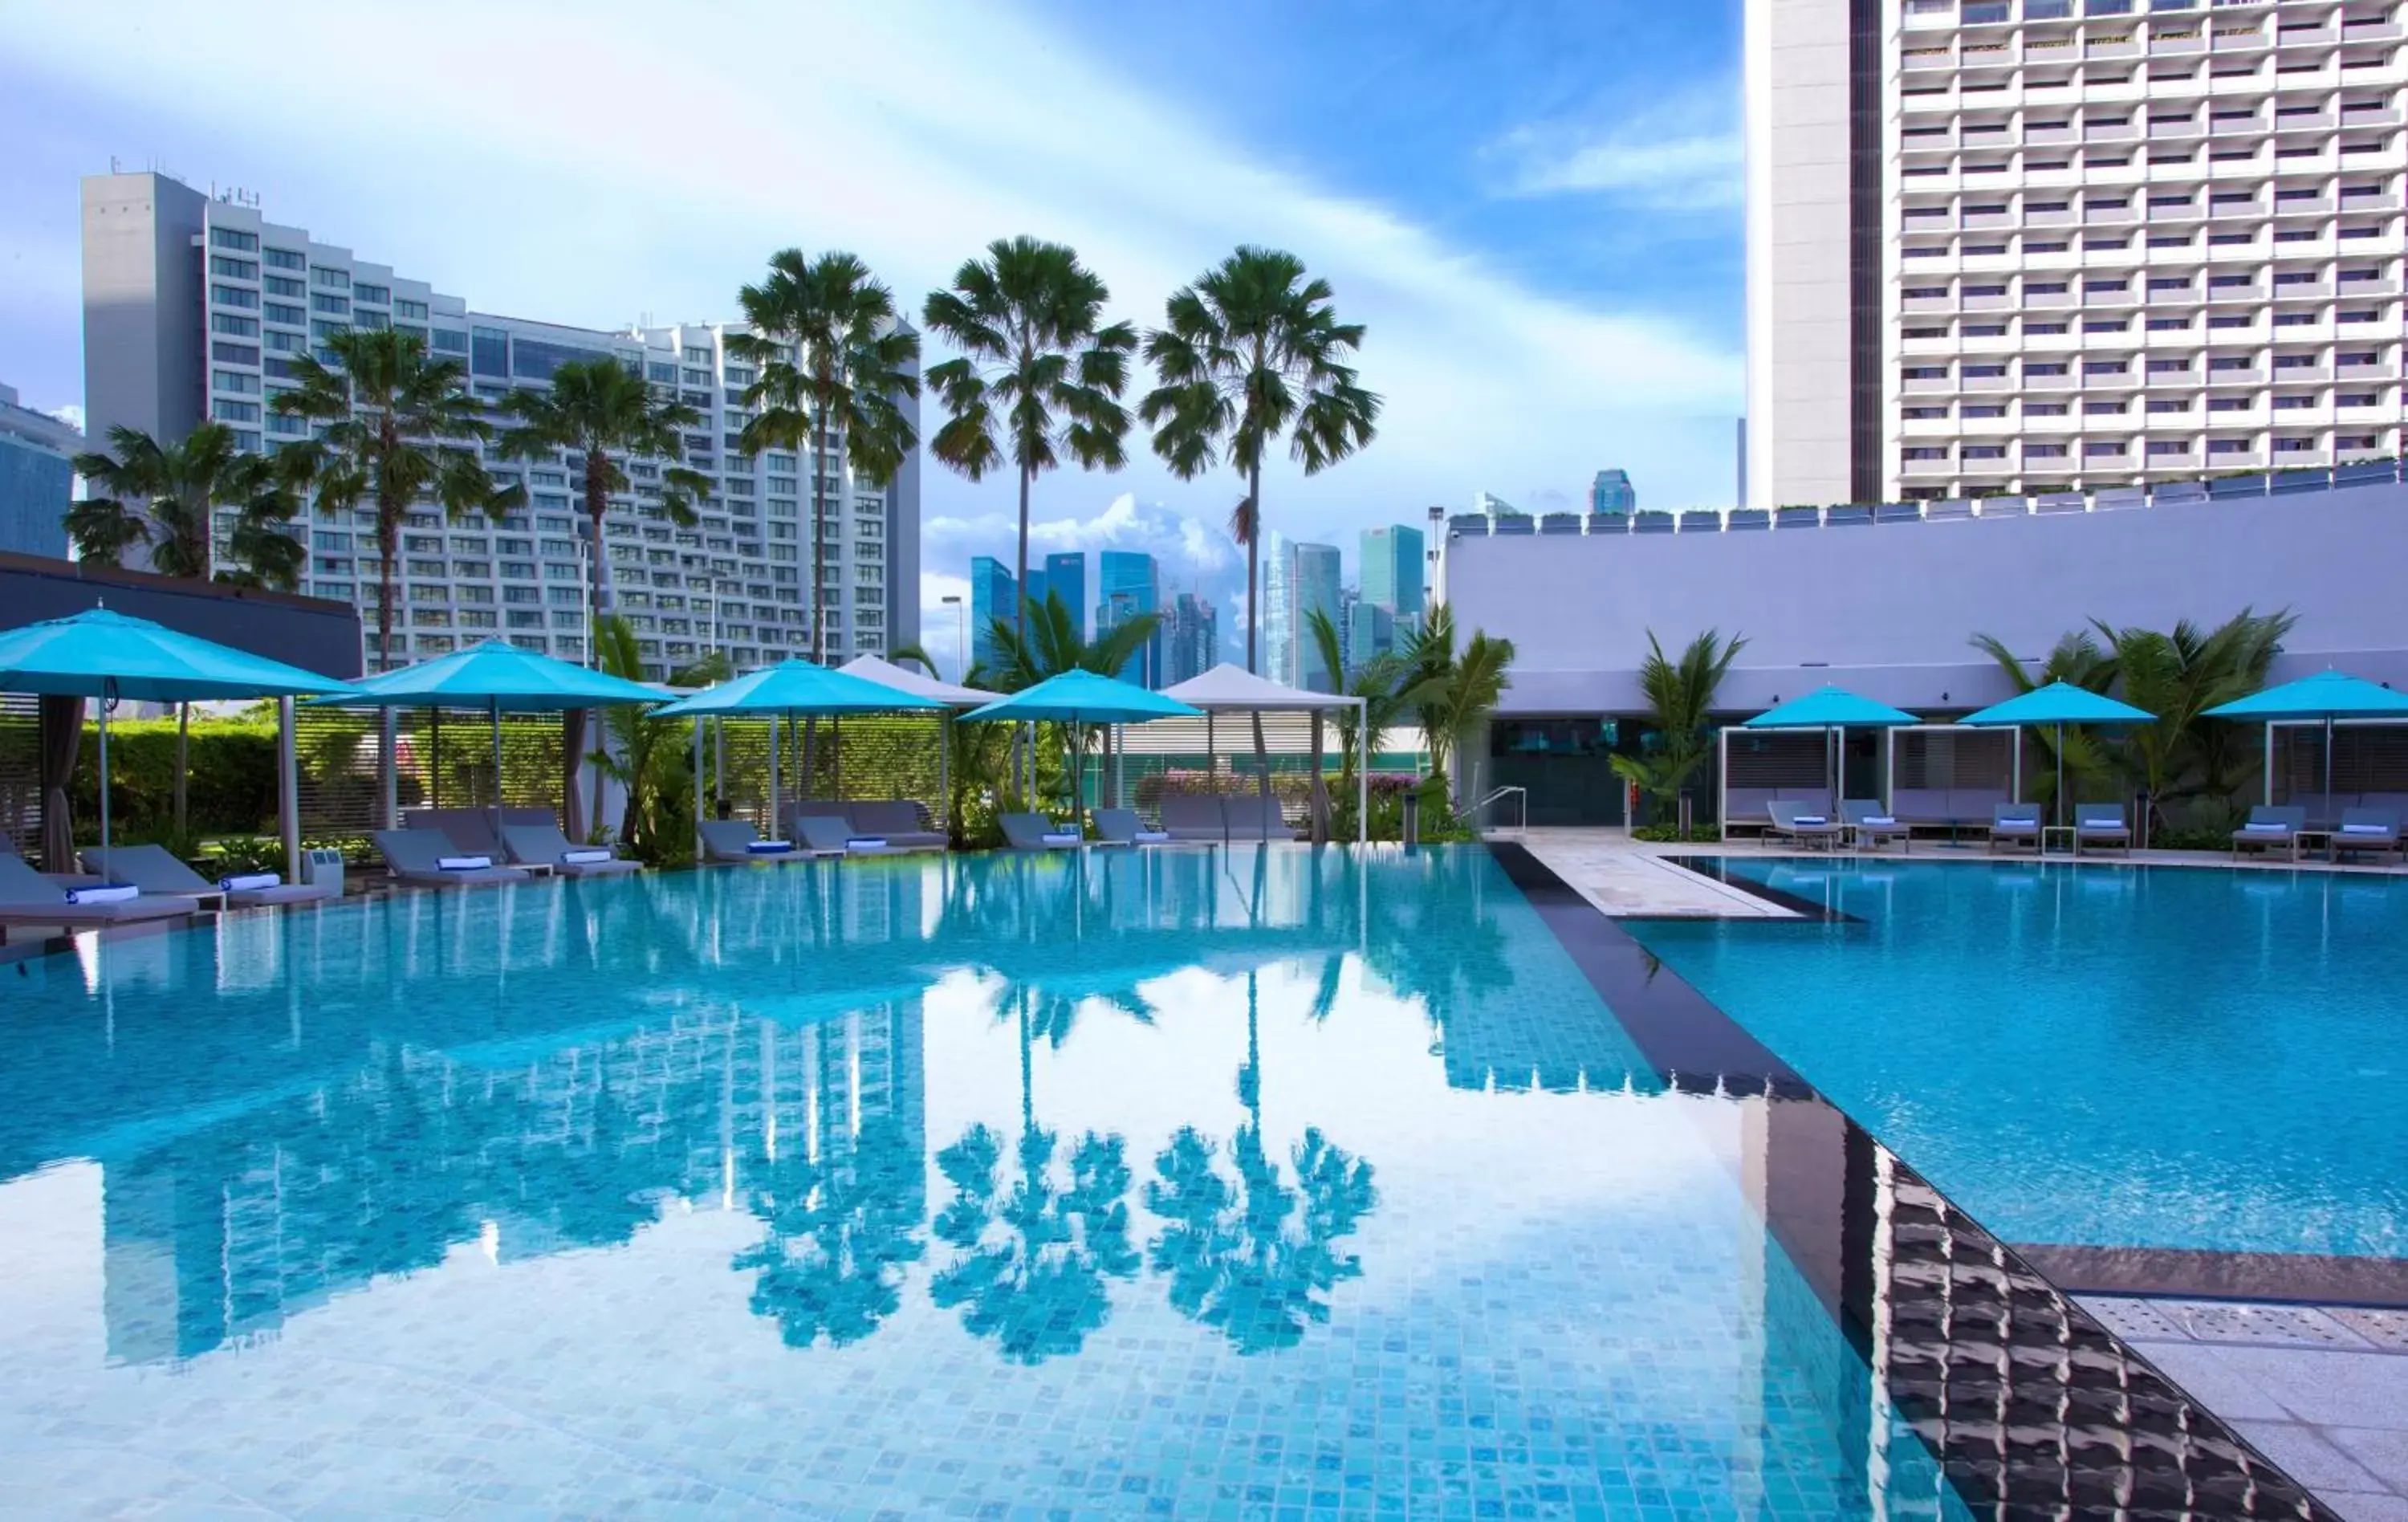 Swimming Pool in Pan Pacific Singapore